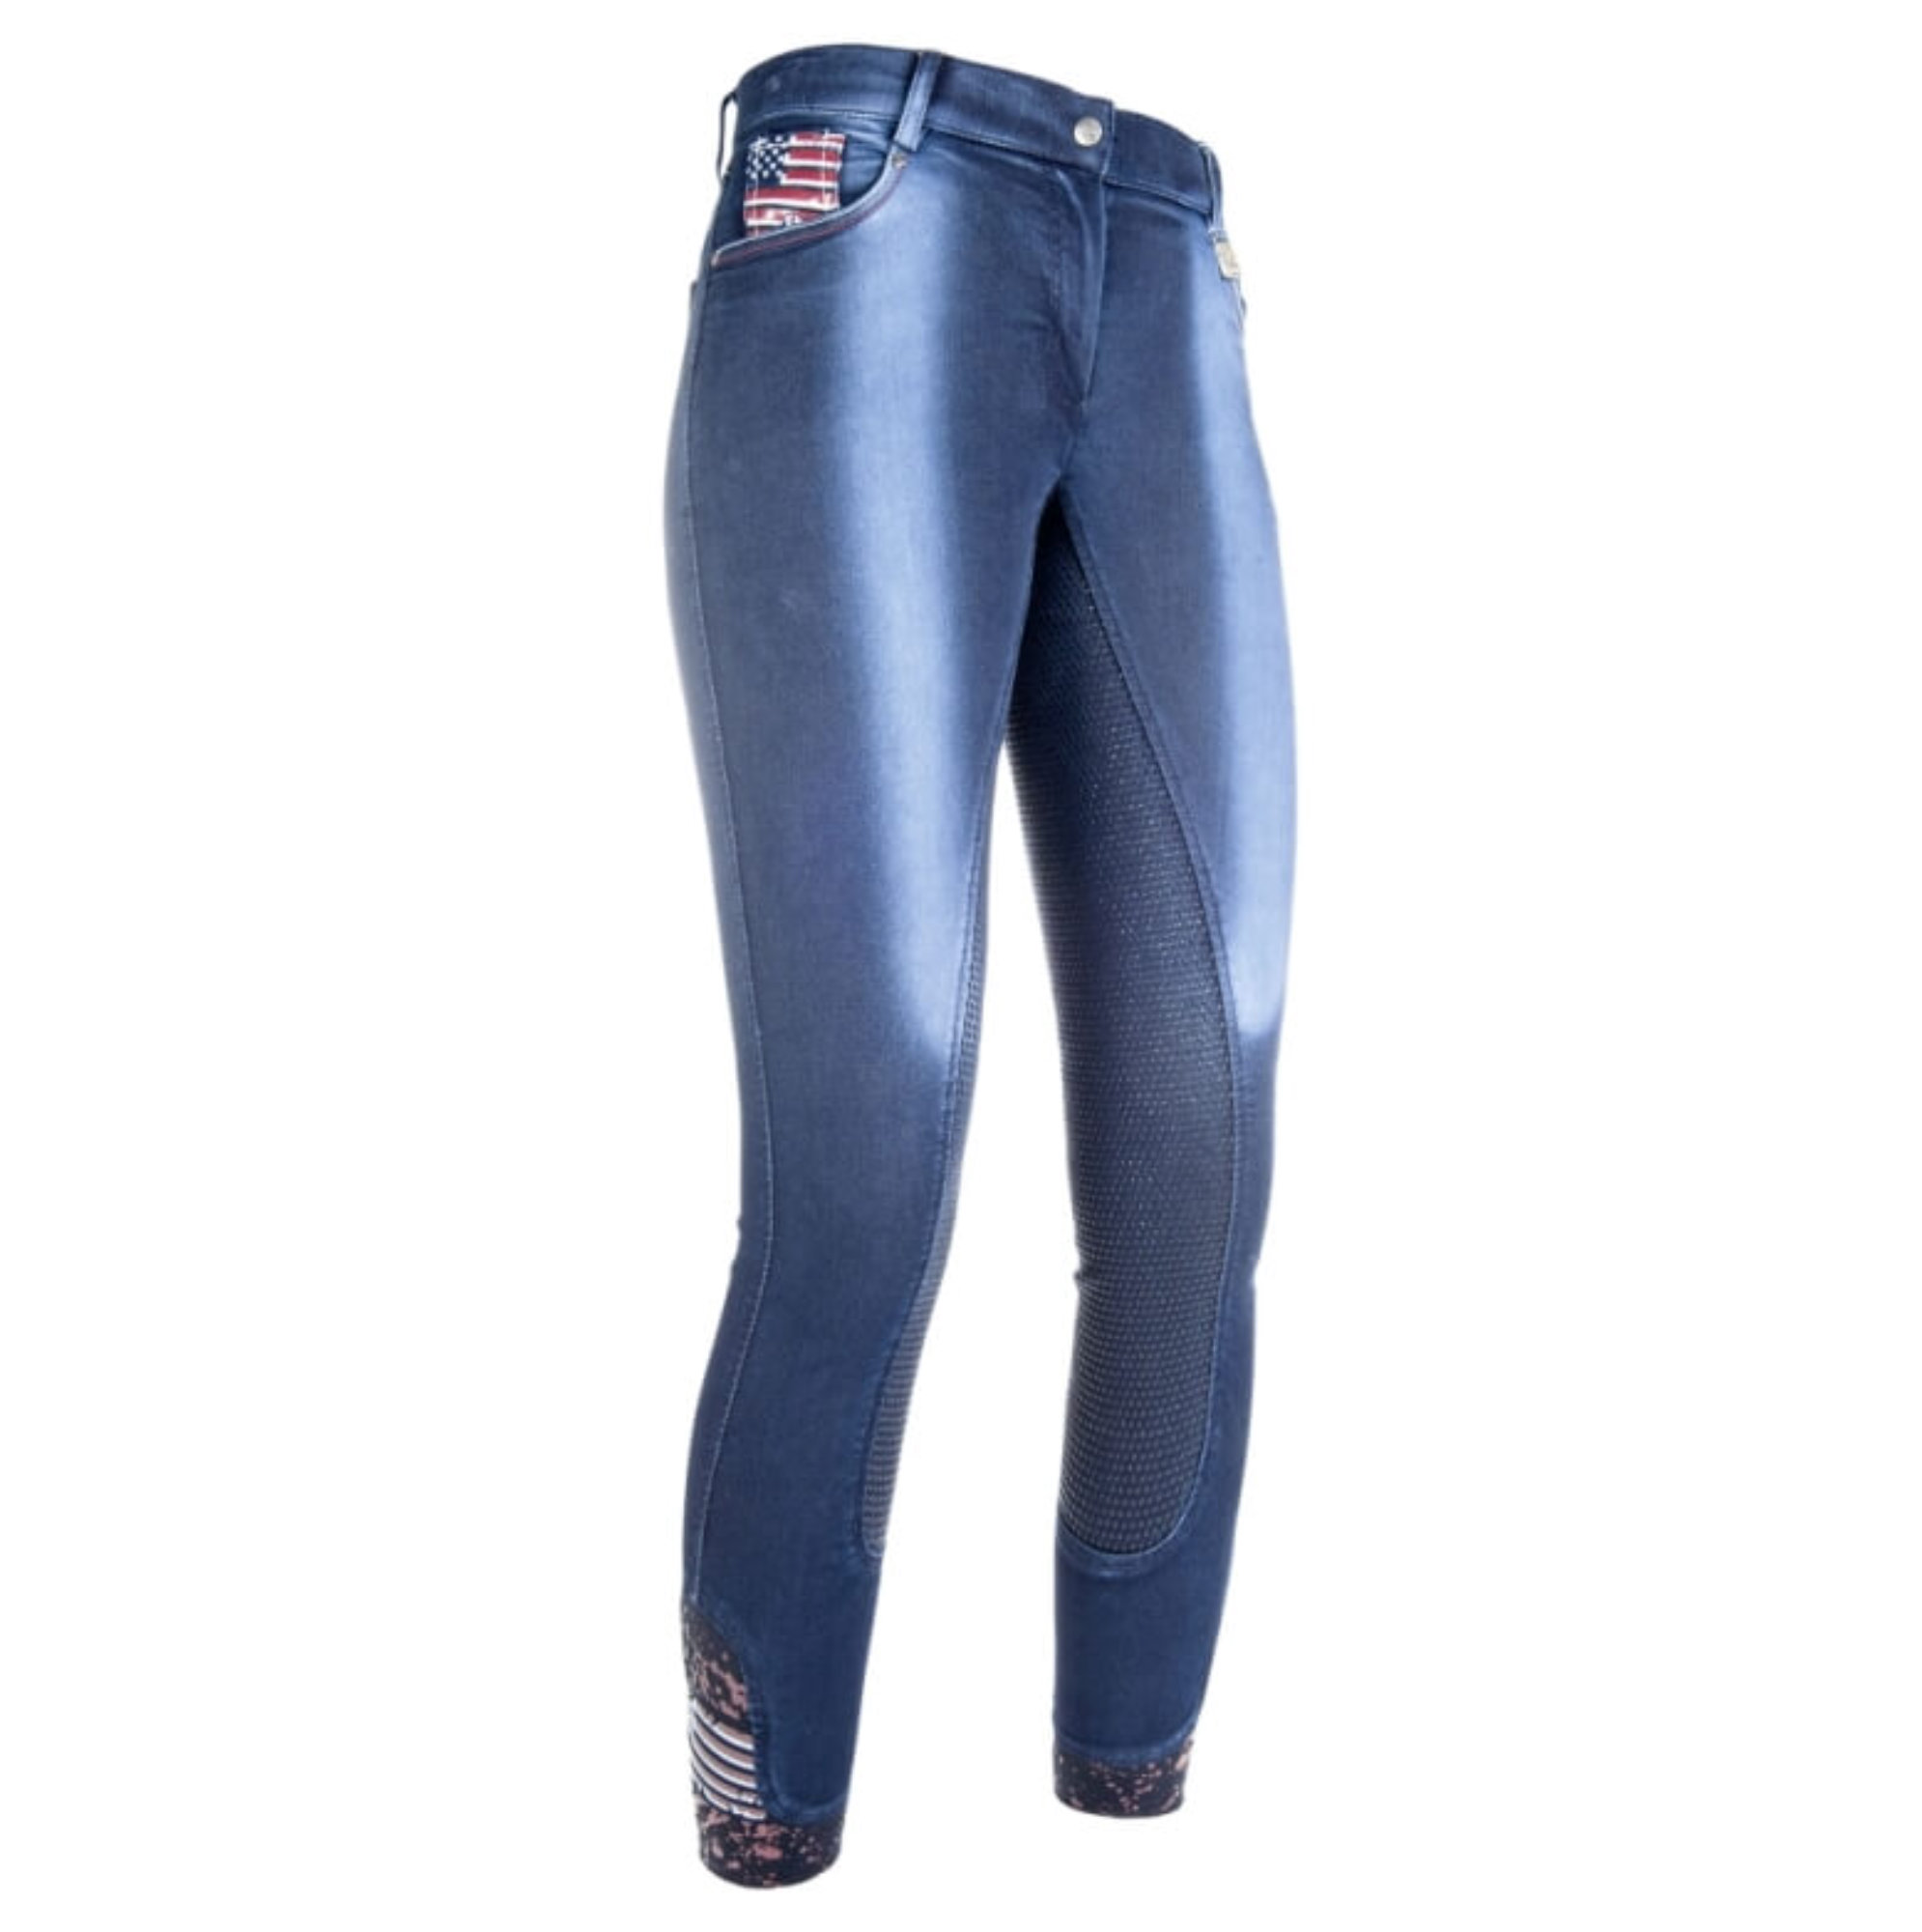 HKM Reithose Jeans mit USA Print, Grip Vollbesatz